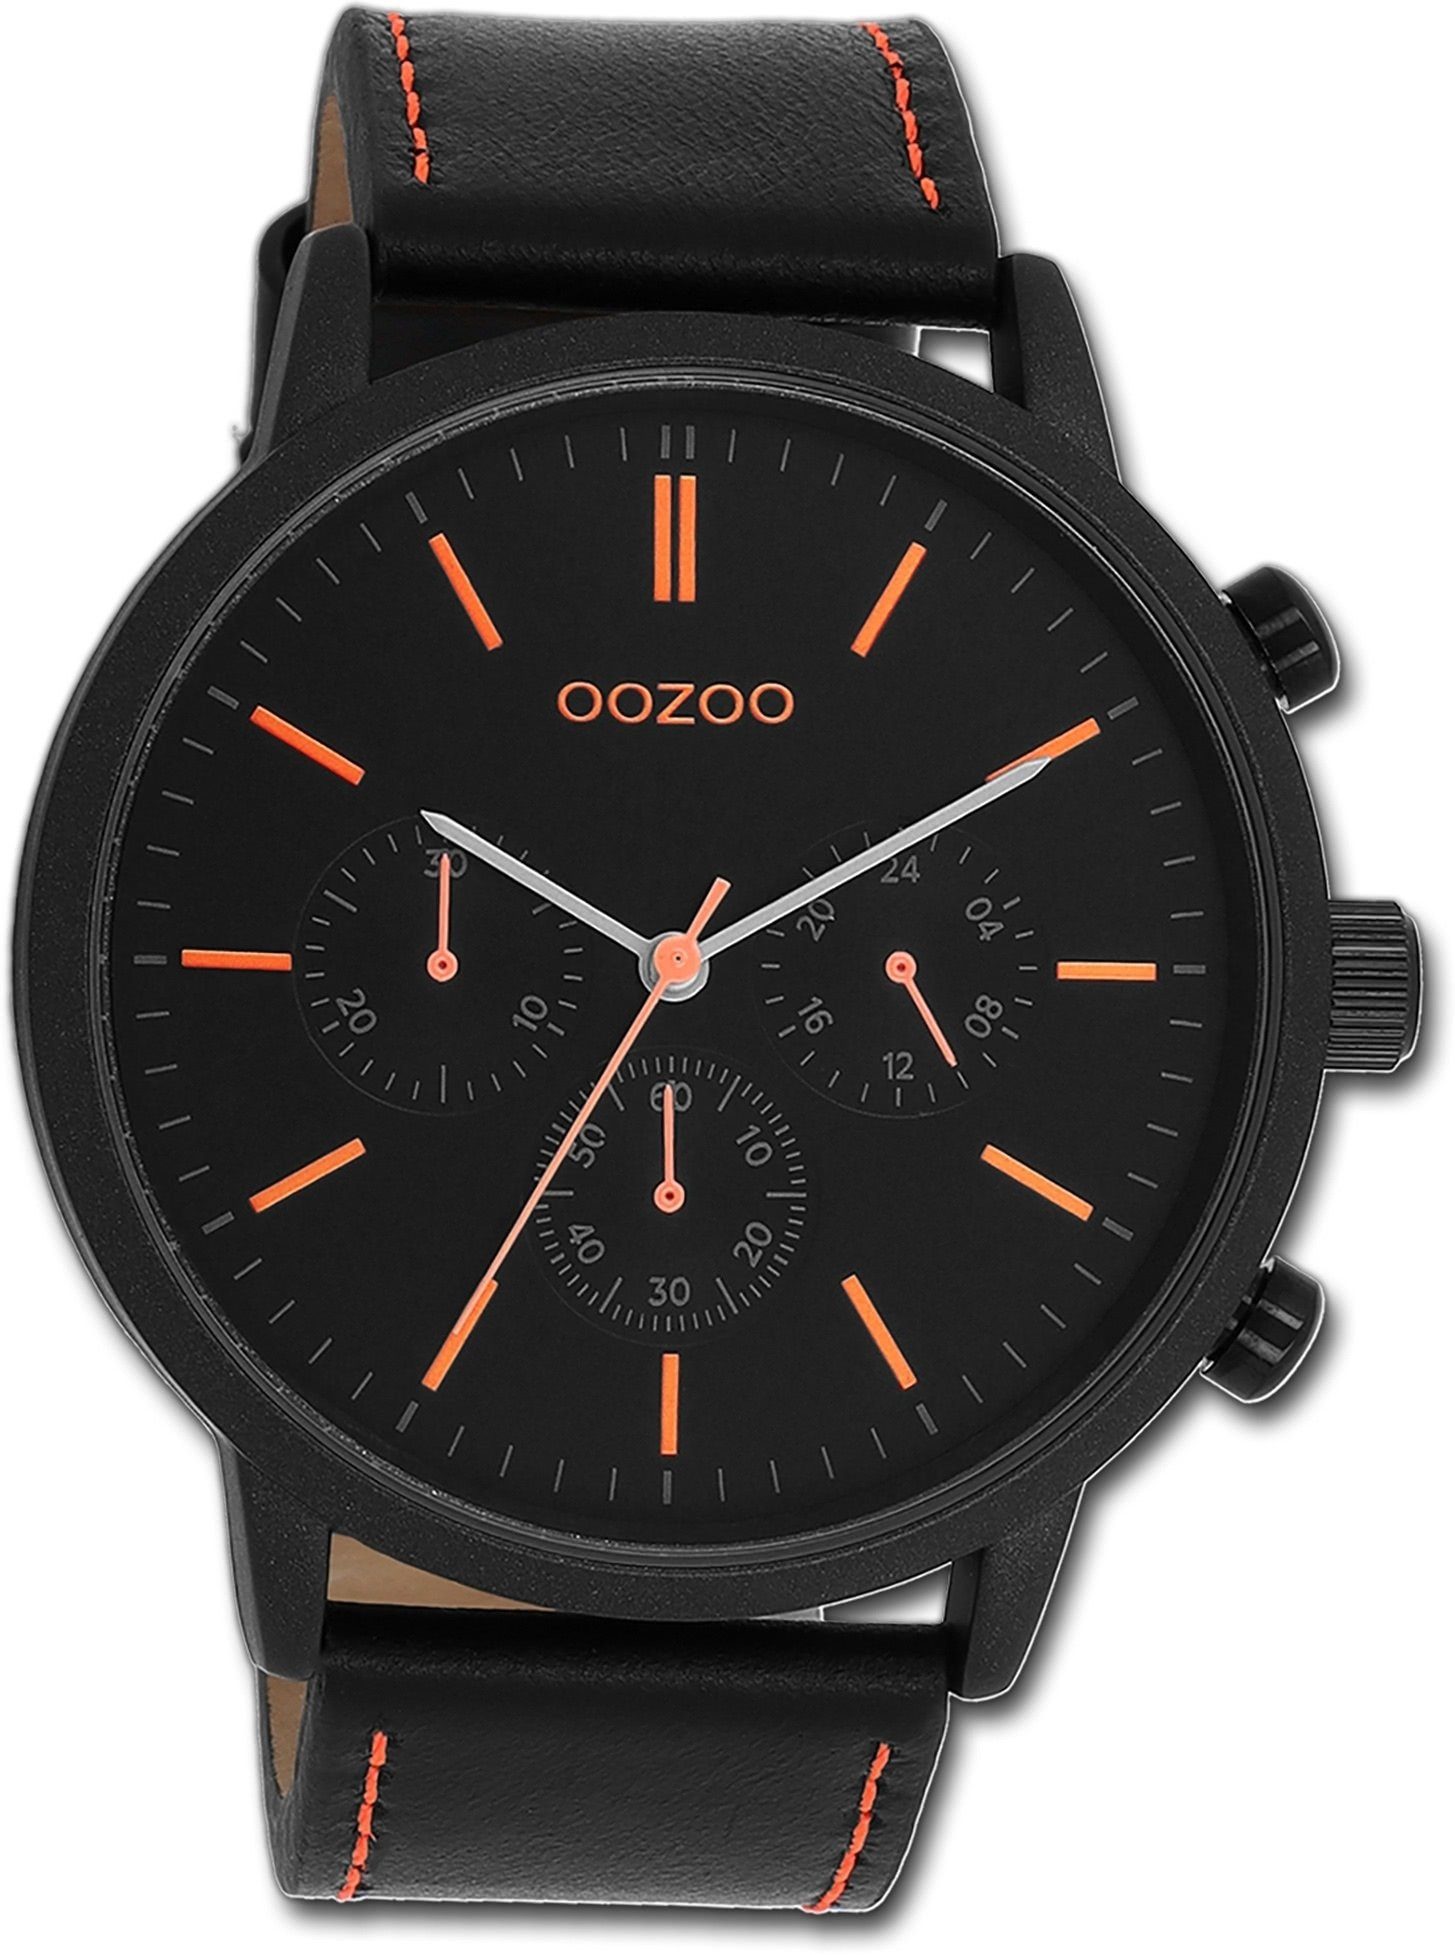 Herrenuhr rundes Gehäuse, Oozoo schwarz, Quarzuhr Lederarmband OOZOO 50mm) extra (ca. Timepieces, groß Armbanduhr Herren